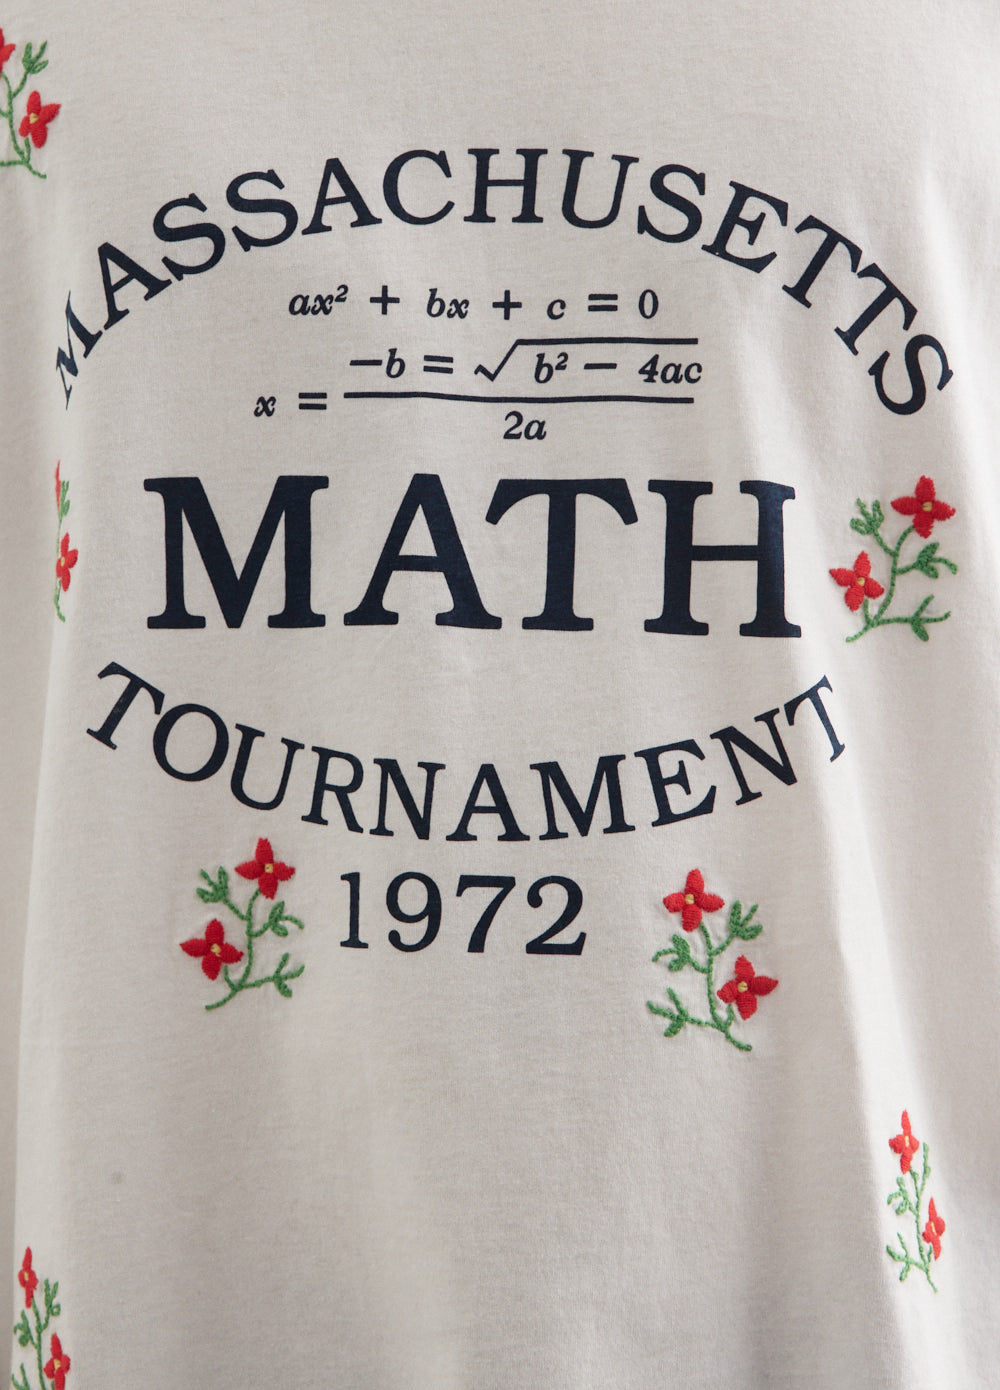 Tournament T-Shirt